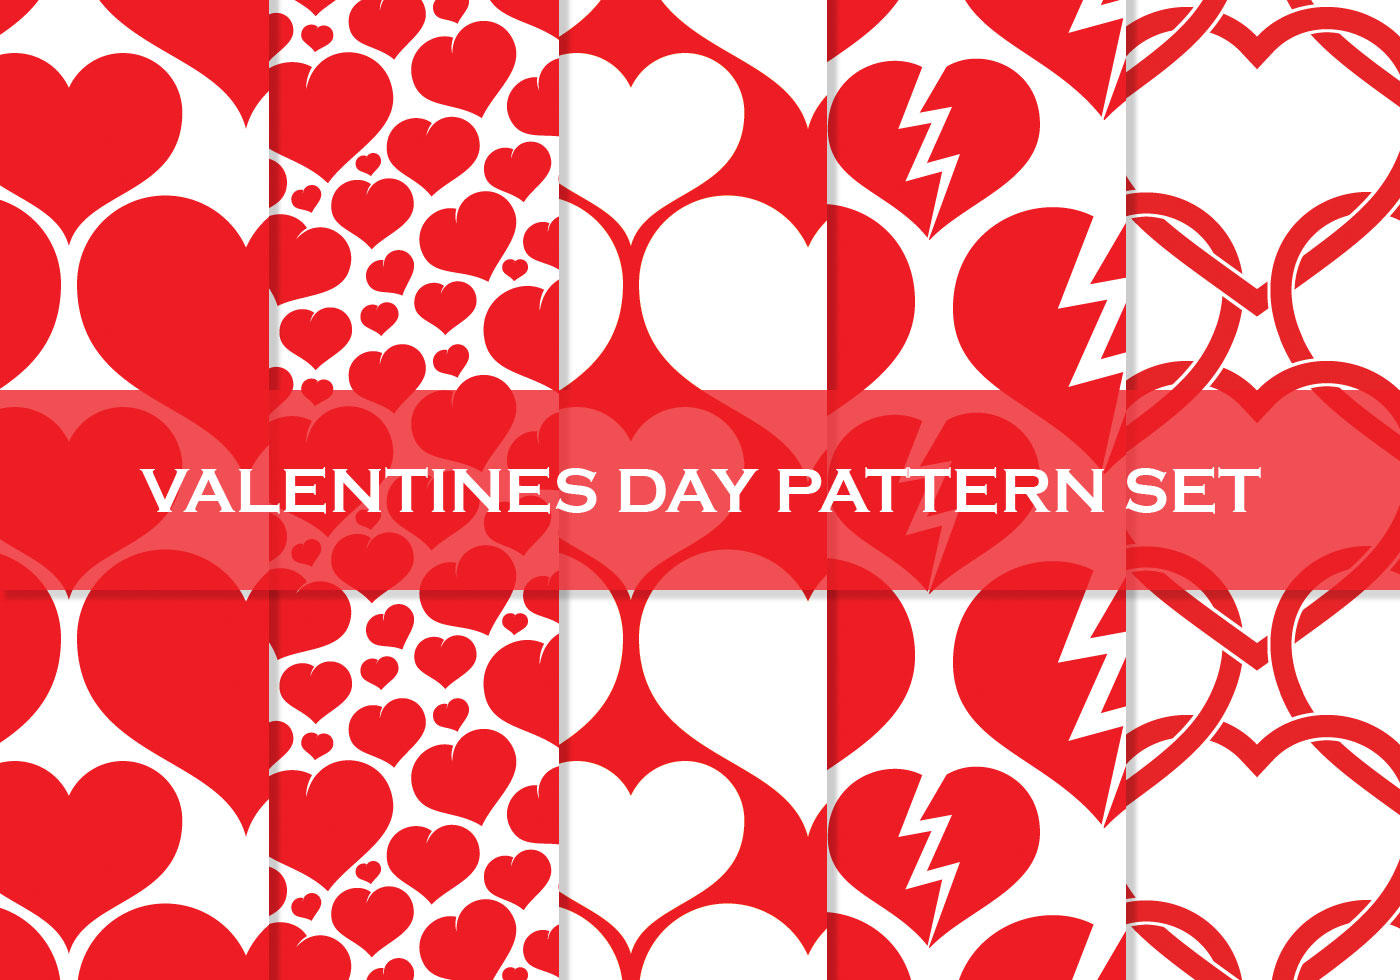 Valentine’s Day: Free Heart High Resolution Patterns